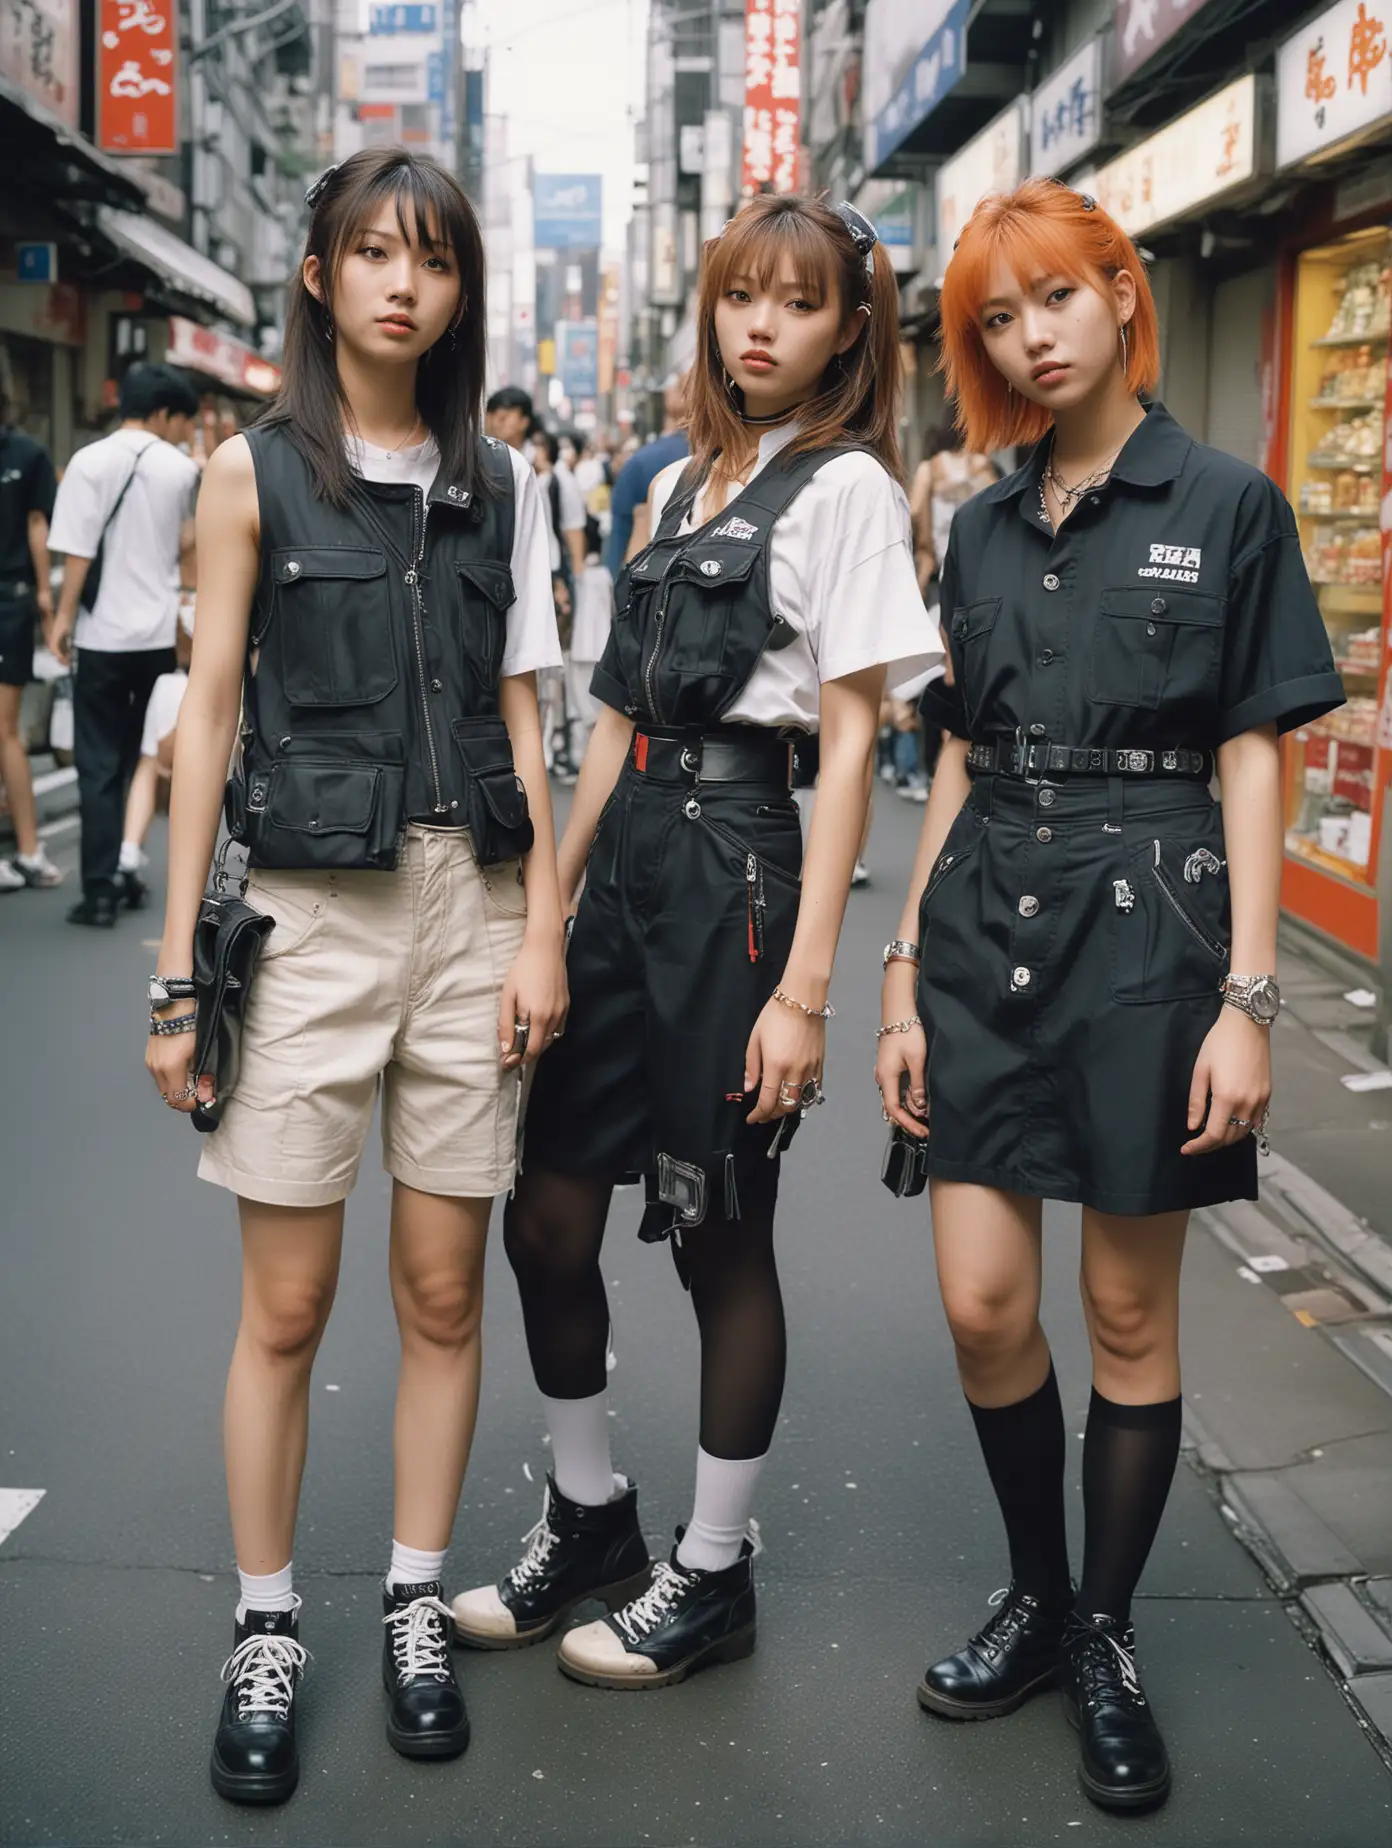 Exaggerated Sensual Fashion Japanese Teenagers in Shinjuku 2000